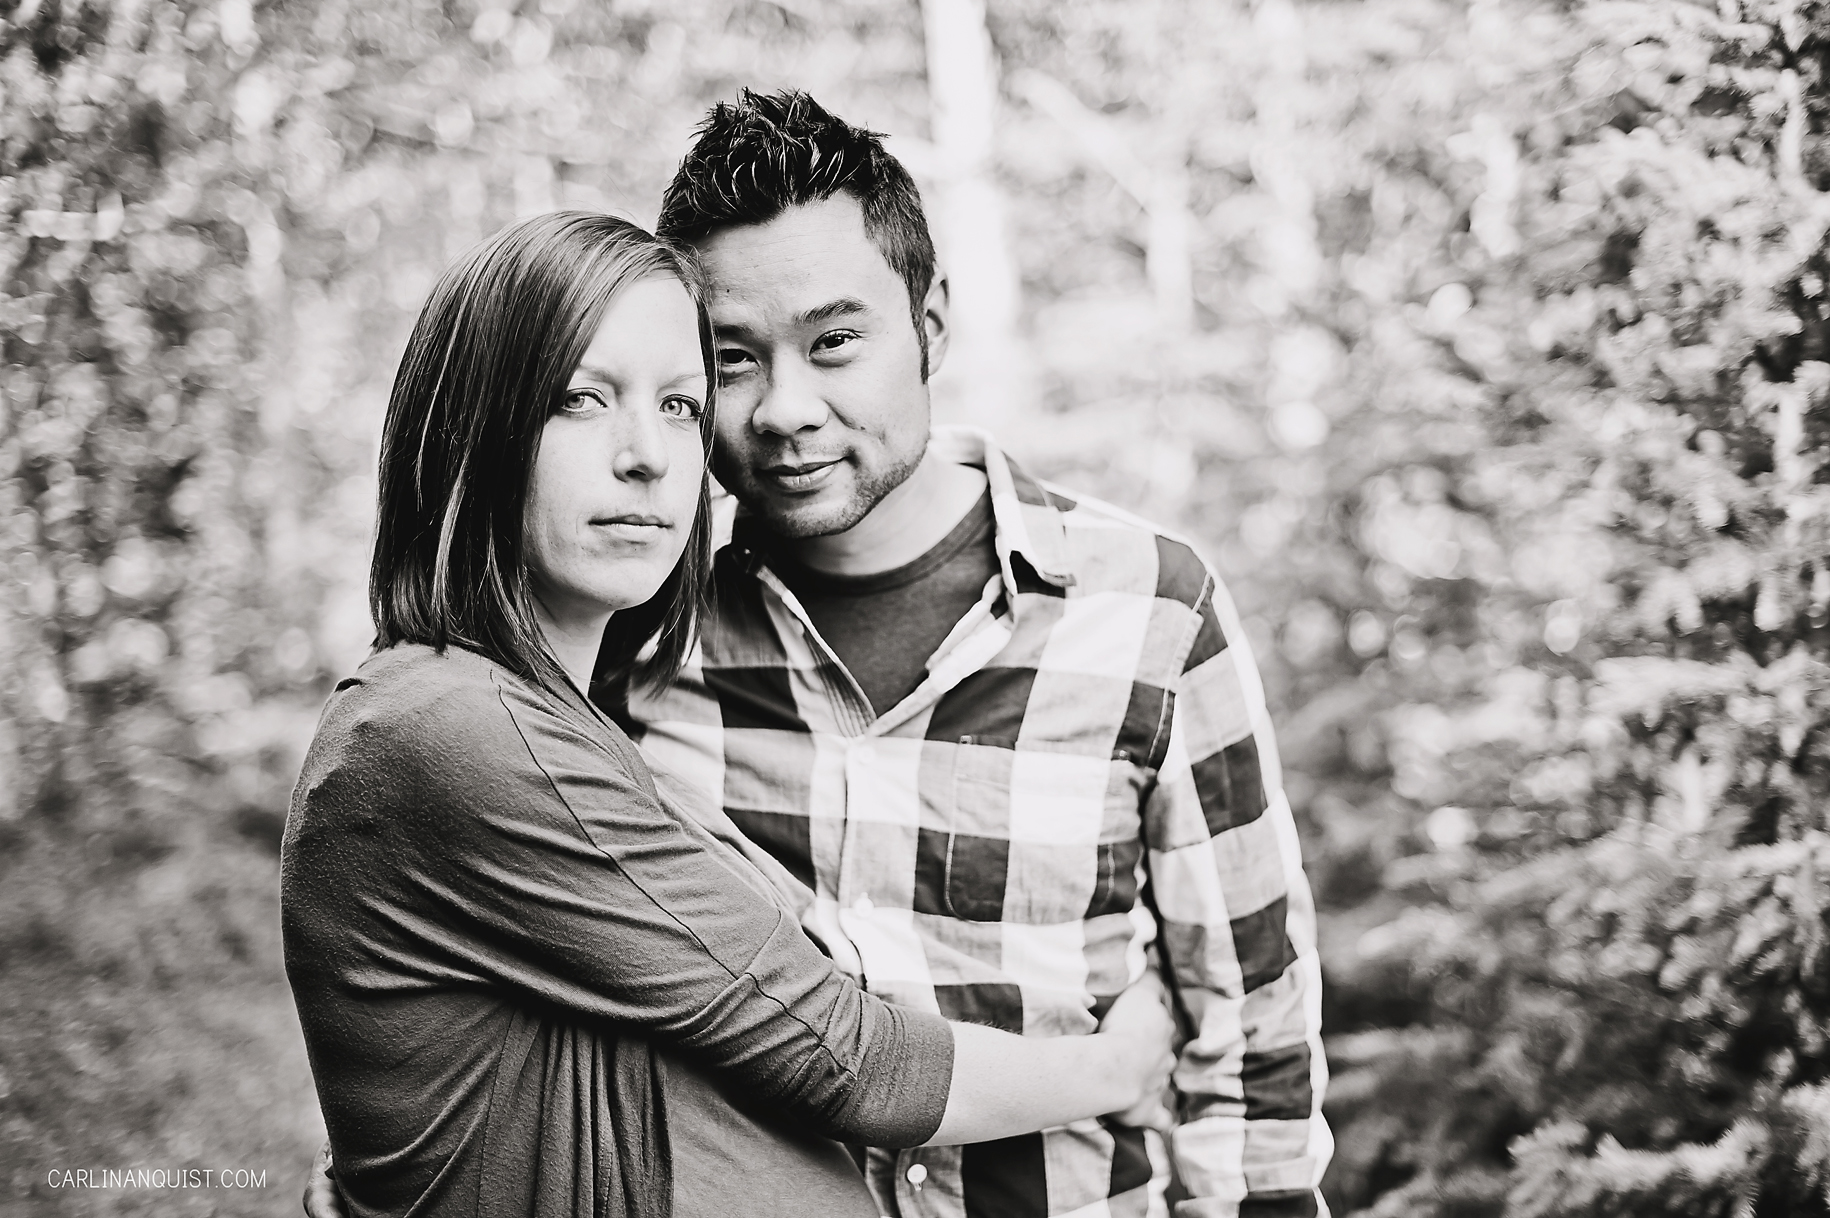 Warren & Lori + 1 // Canmore Engagement Photographers | Canmore Maternity Photographers | Carlin Anquist Photography